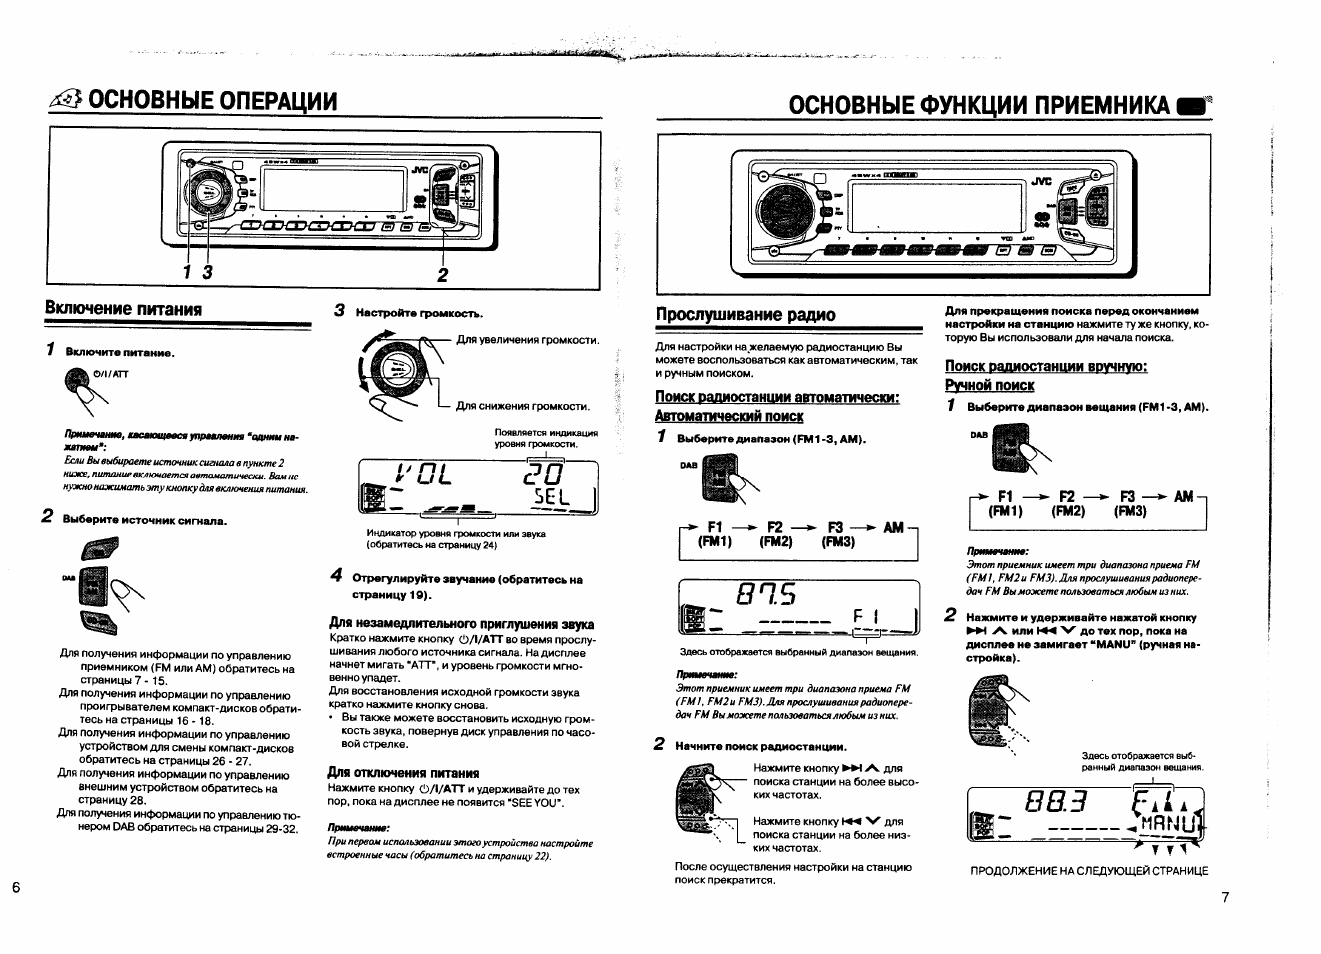 Магнитола jvc инструкция на русском